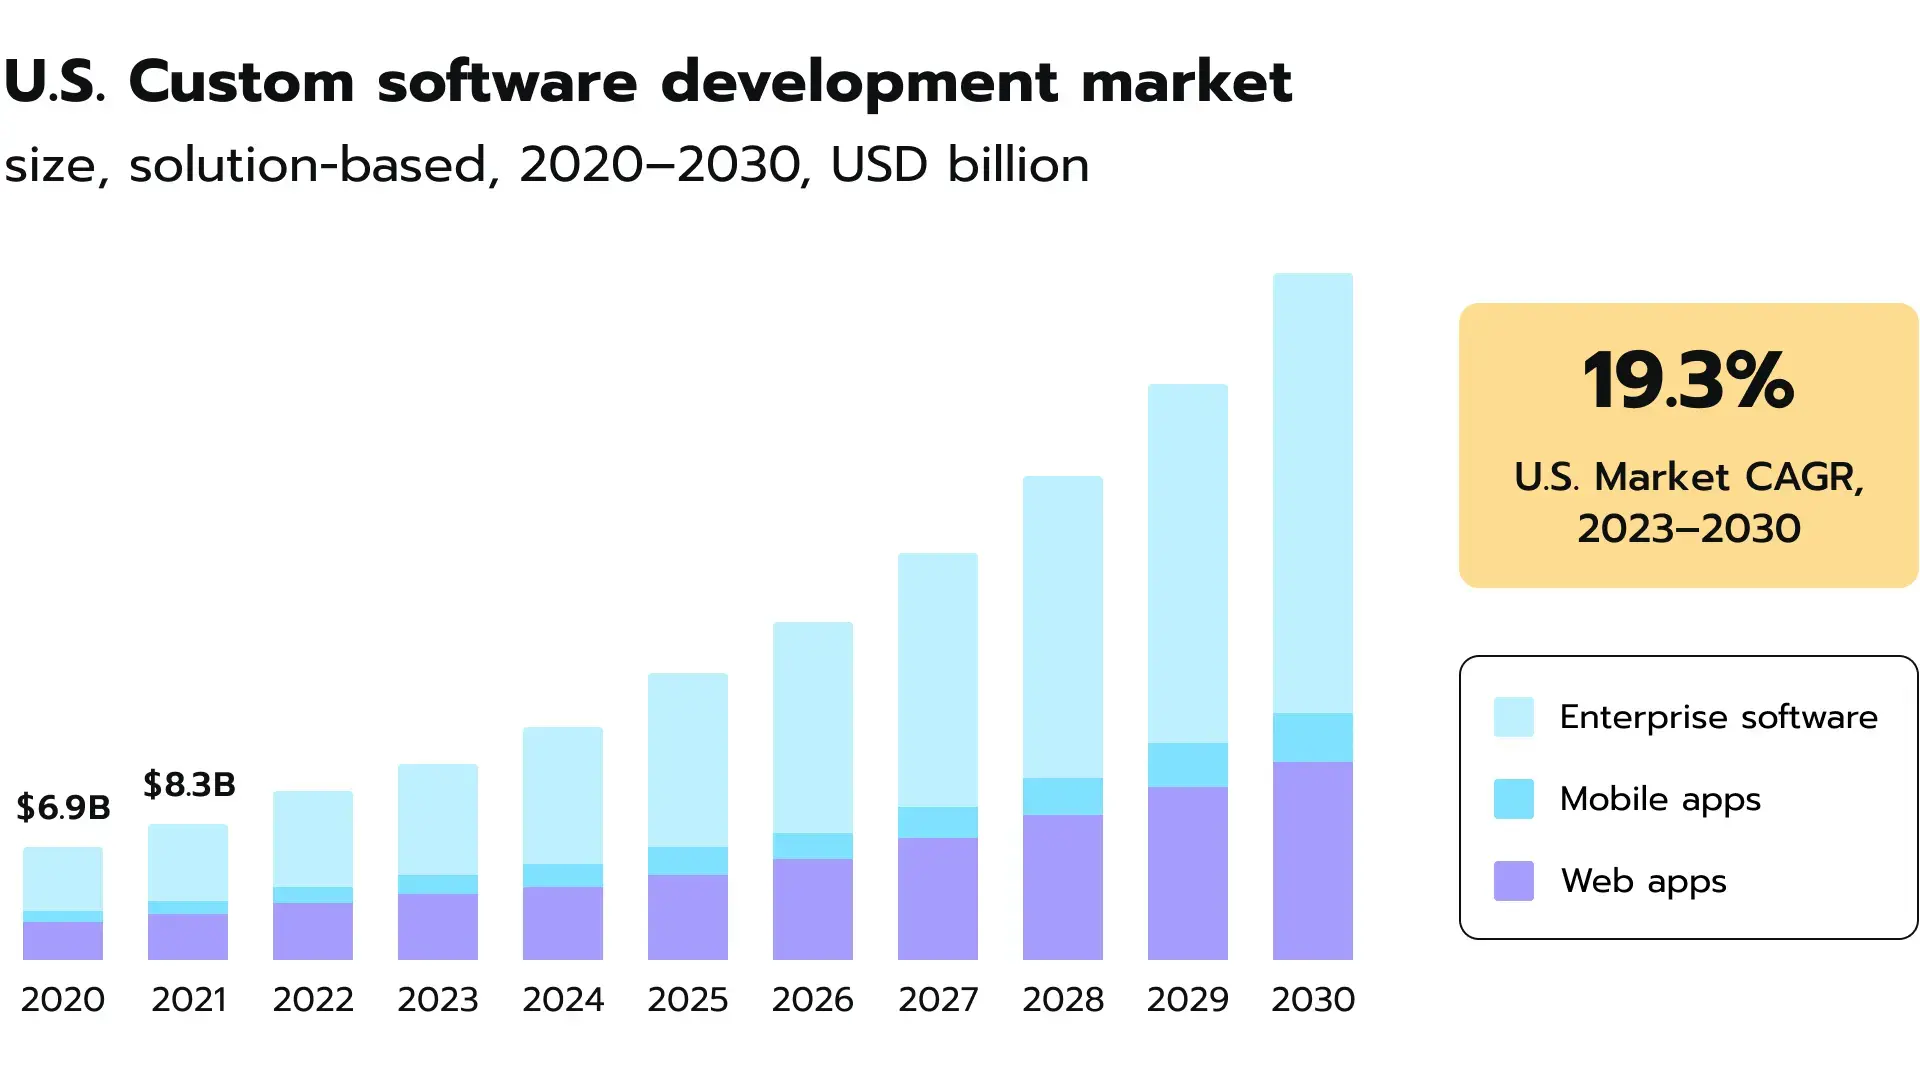 U.S. custom software development market size 2020-2030 